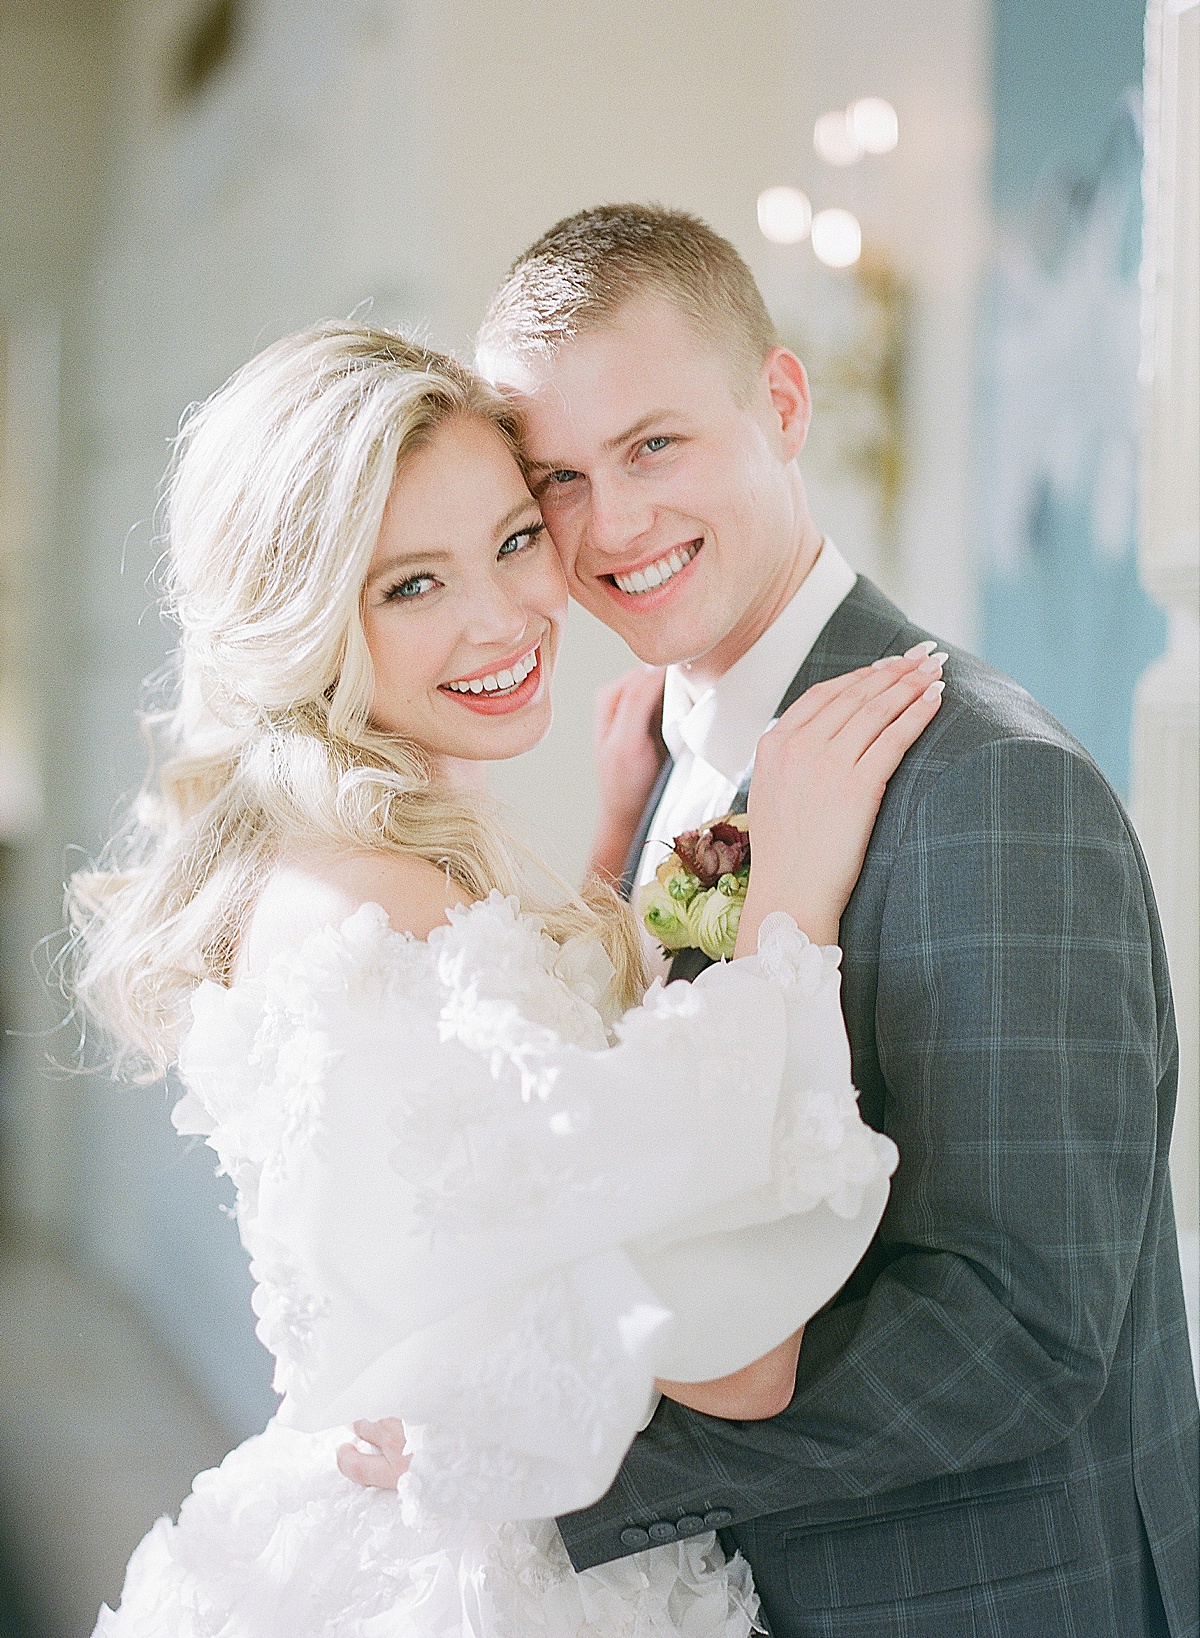 Wedding Venues in Dallas Bride and Groom Smiling at Camera Photo